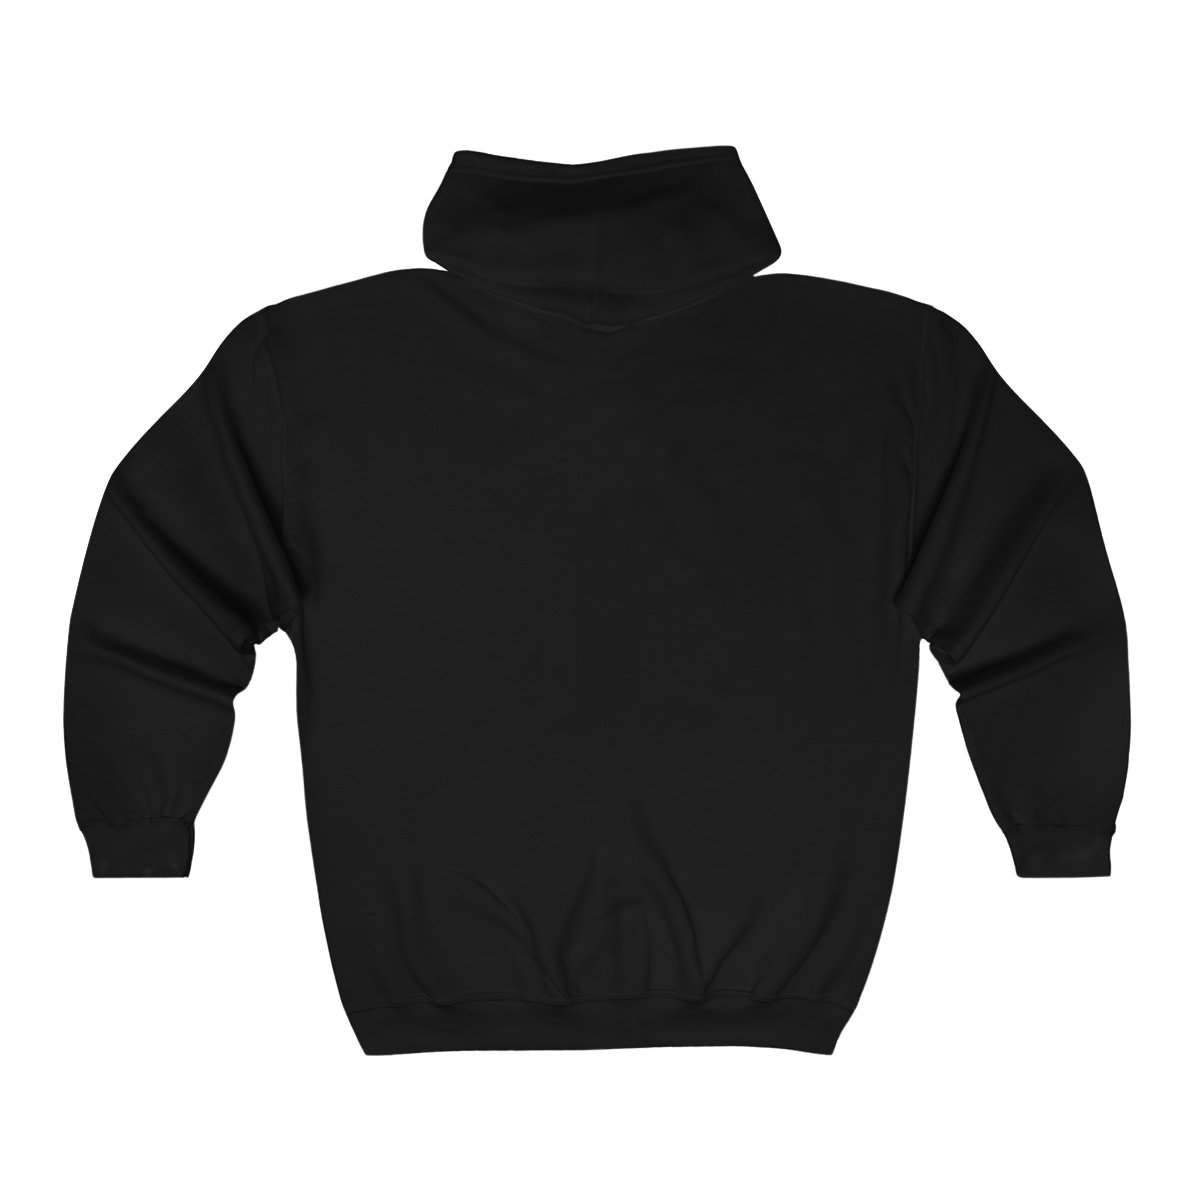 Sanctuary International – Metal Dude Family Full Zip Hooded Sweatshirt